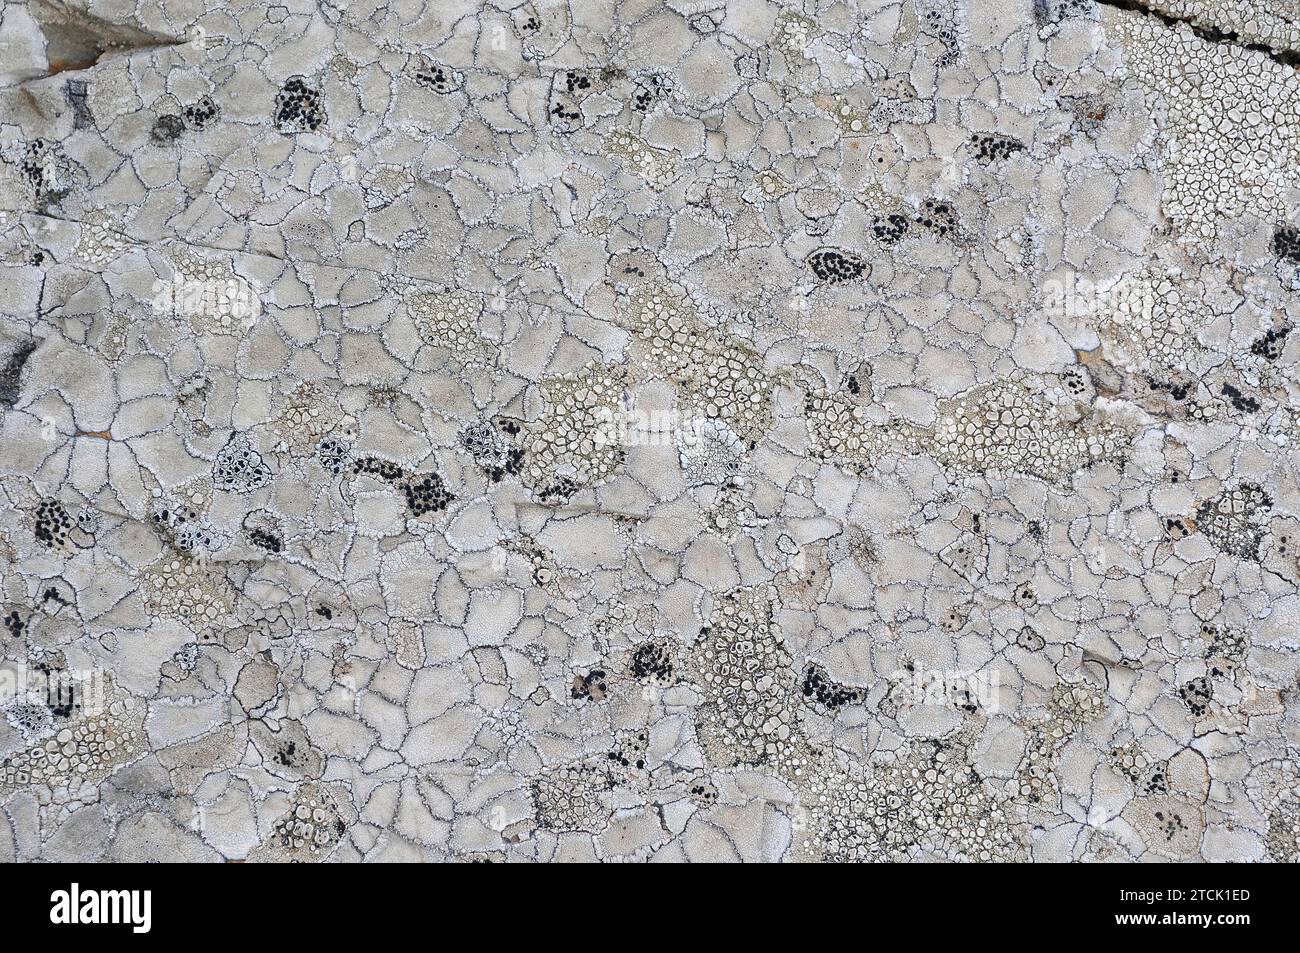 Crustoses lichens completely covering a rock (Lecanora rupicola, Aspicilia sp., Ochrolechia sp. Porpidia sp.). Stock Photo